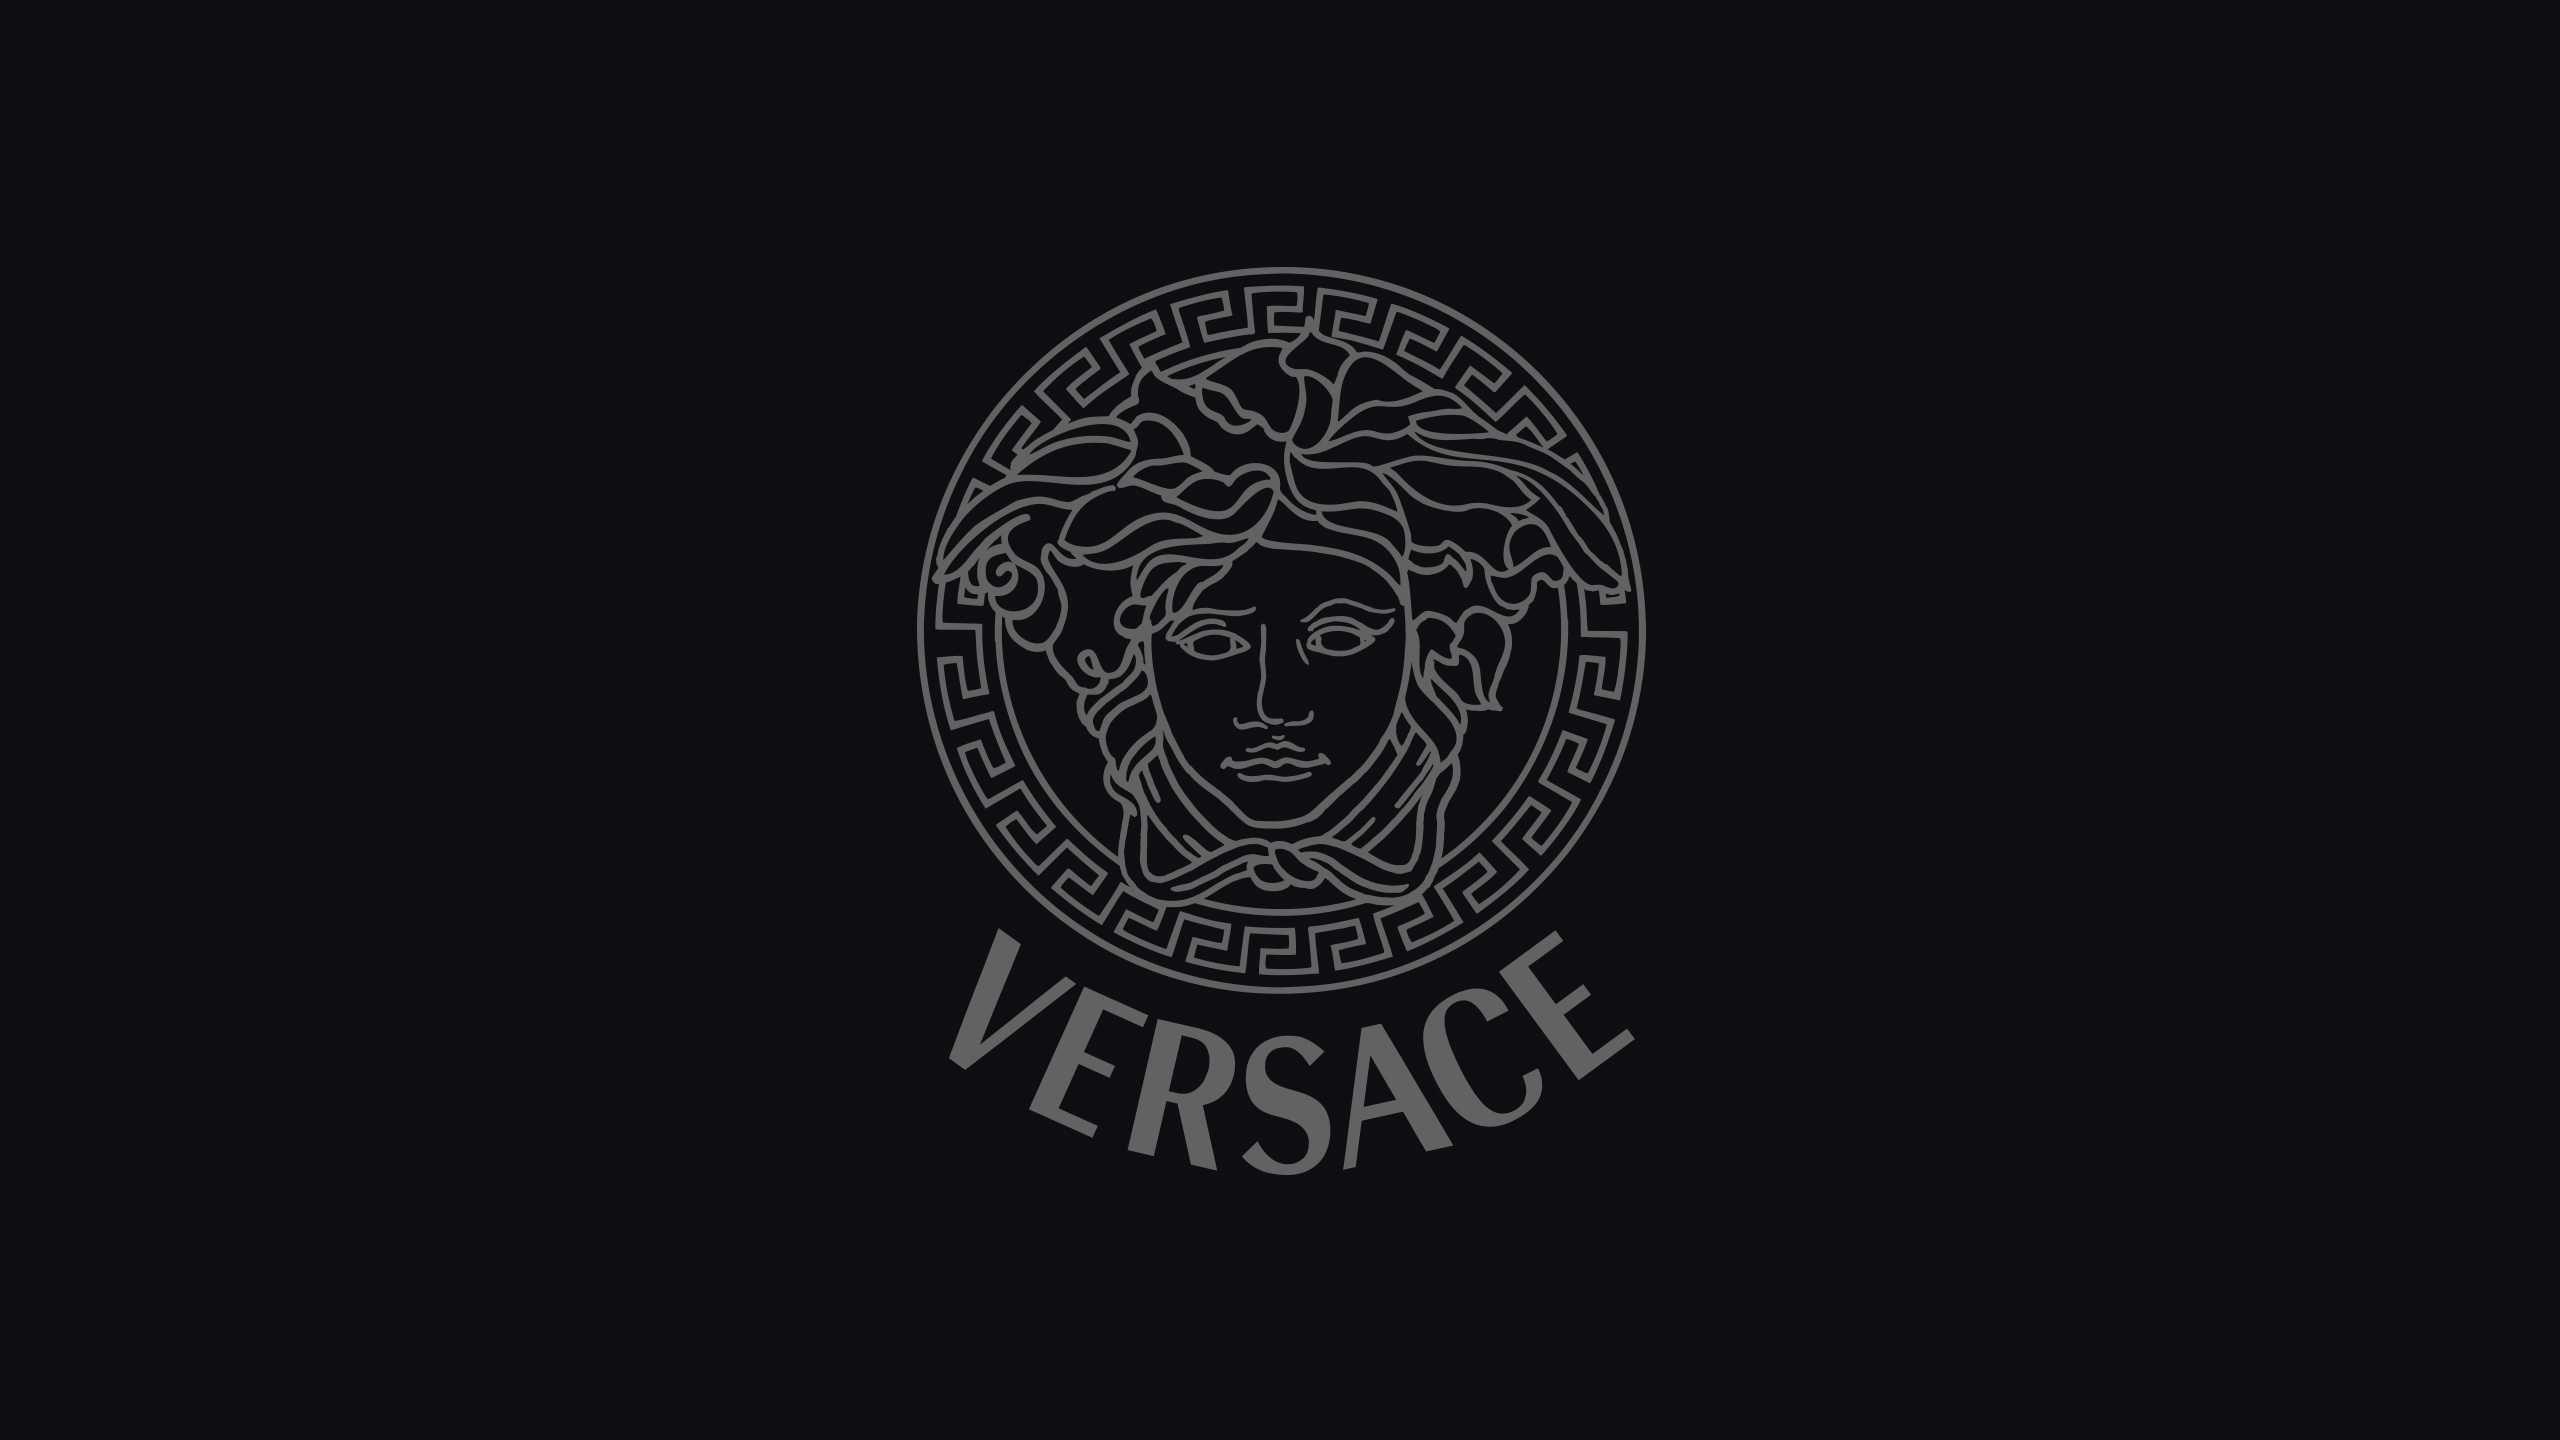 Versace 4k Wallpapers  Top Free Versace 4k Backgrounds  WallpaperAccess